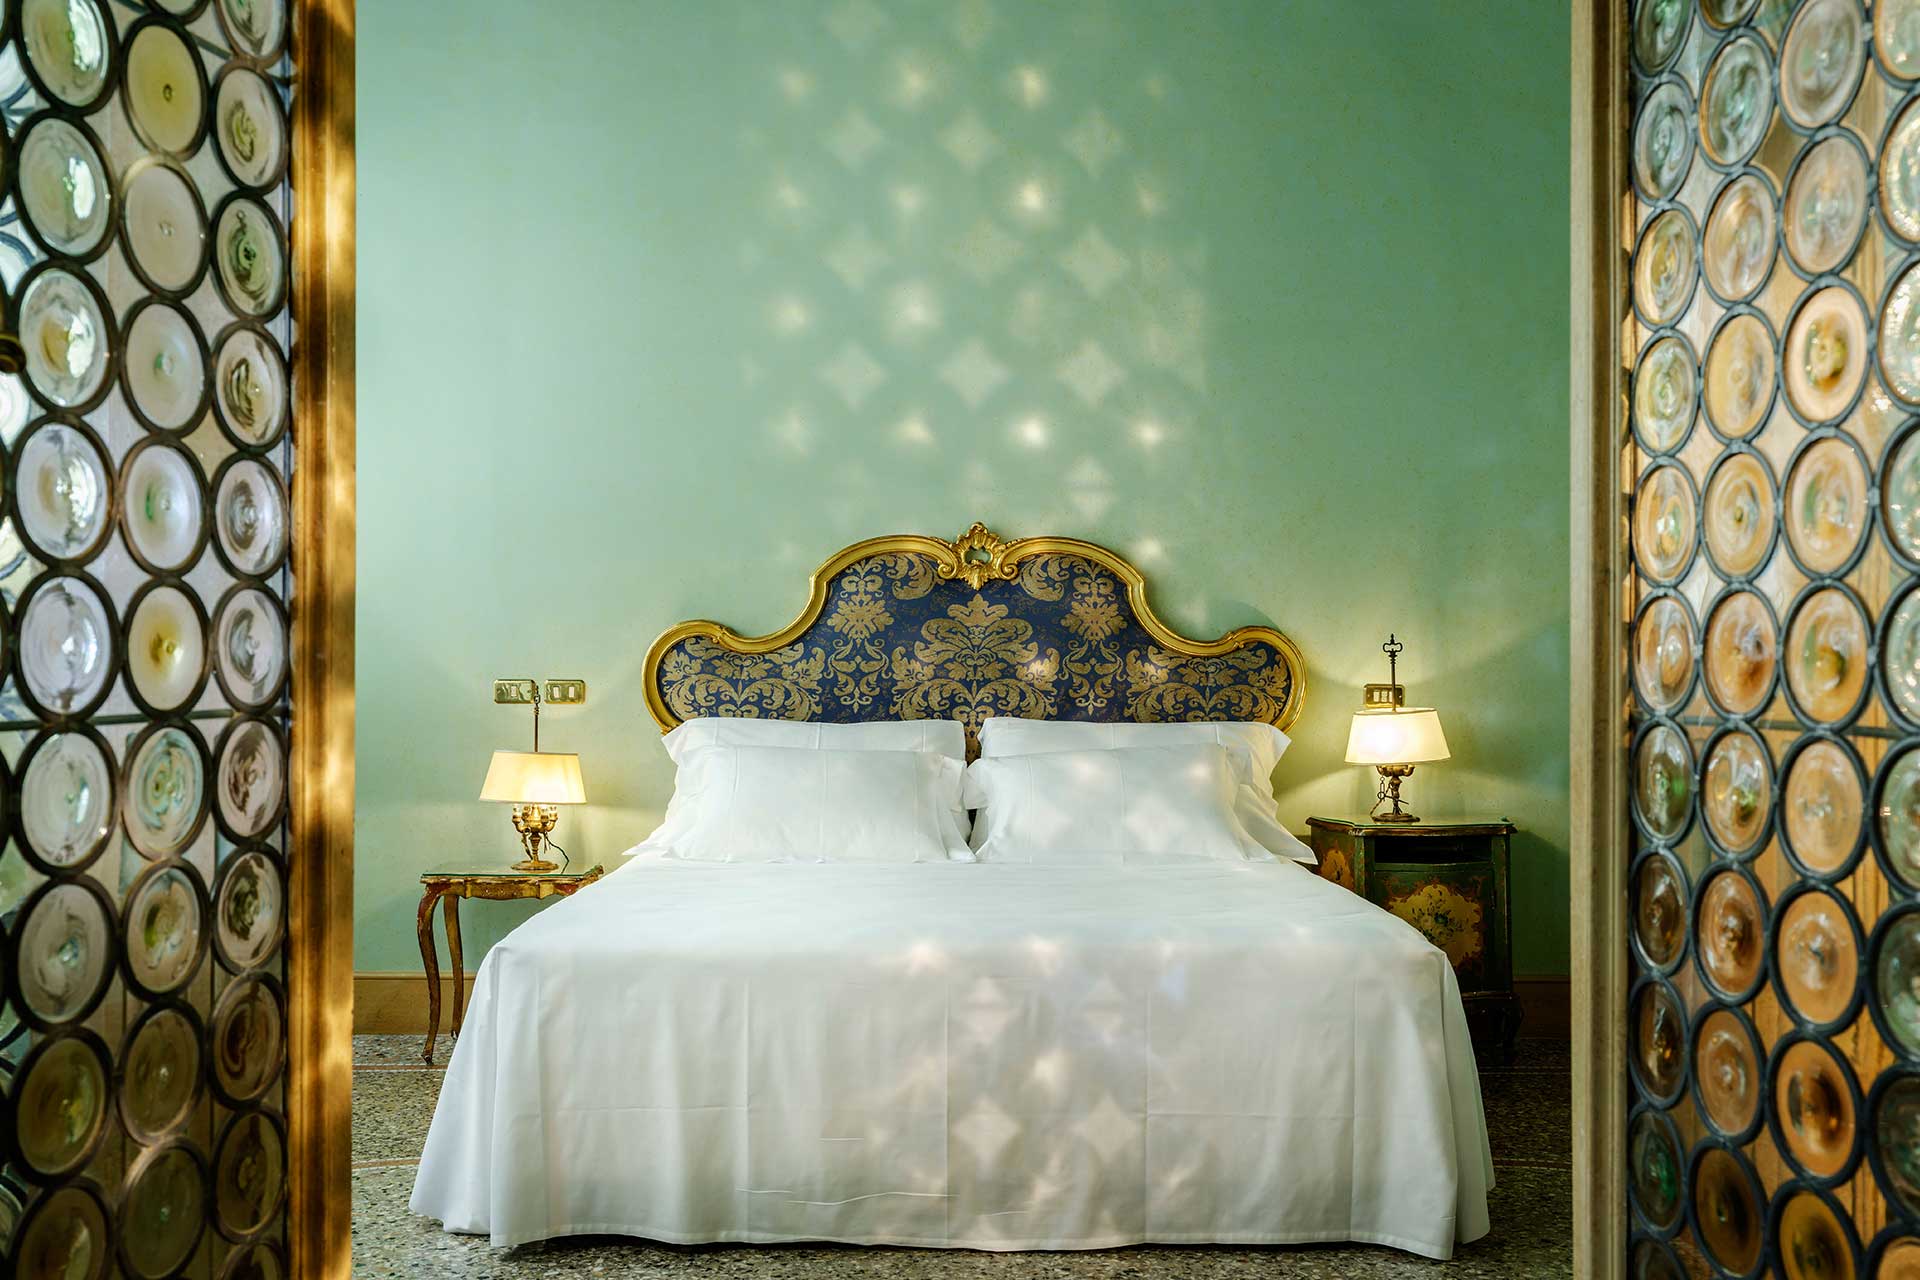 Hotel Locarno, bedroom view